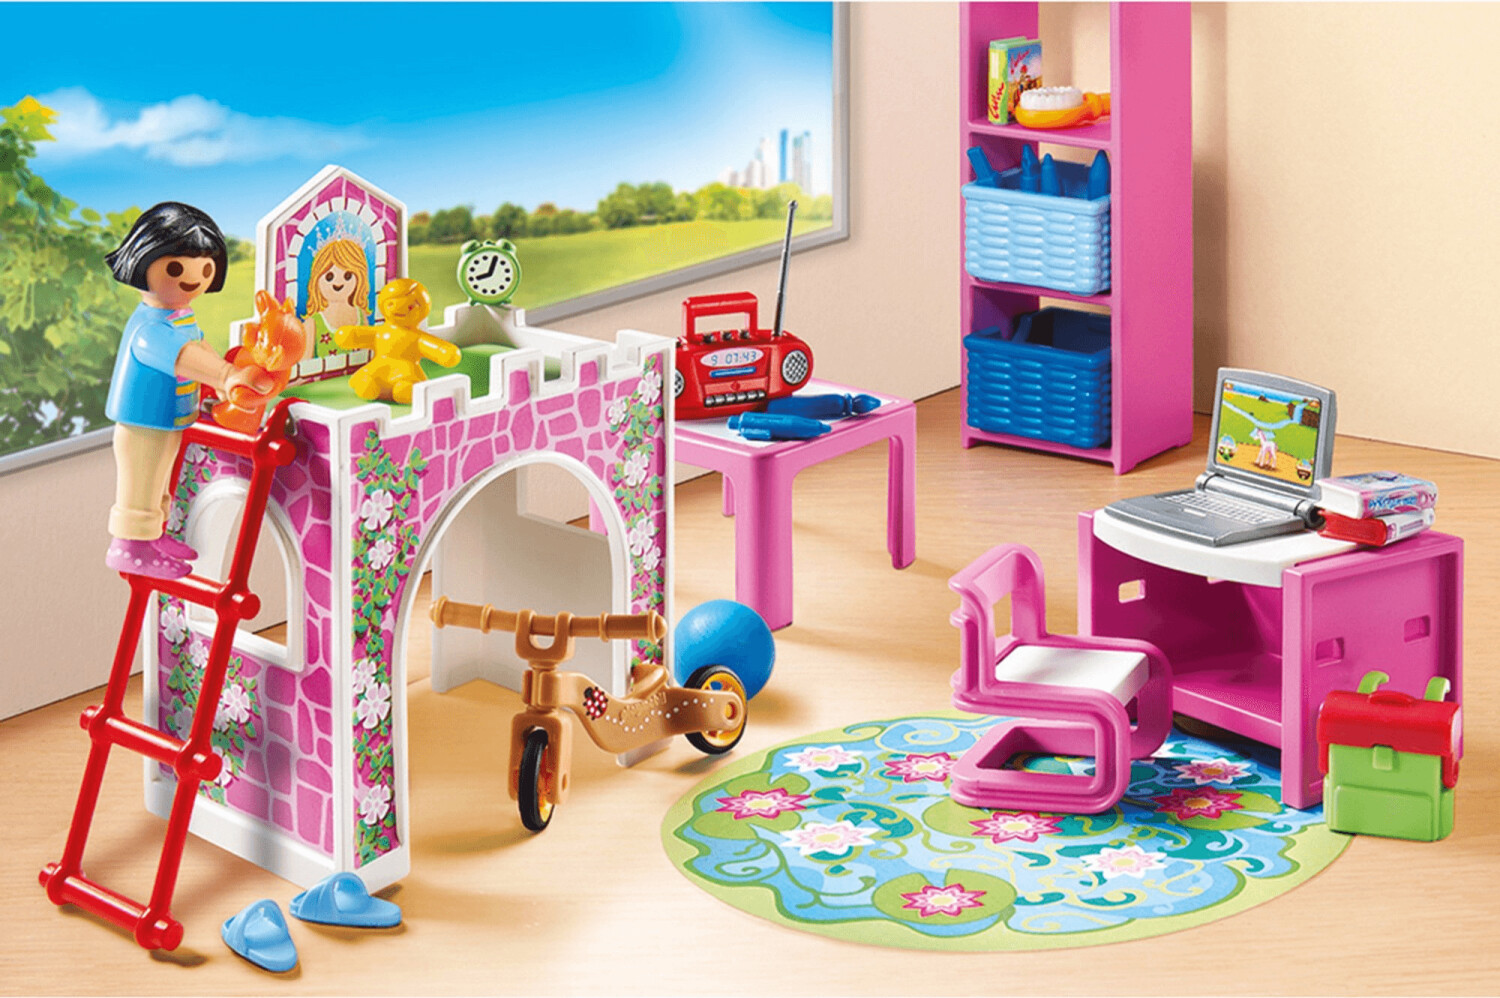 Chambre enfants playmobil - Playmobil - Prématuré